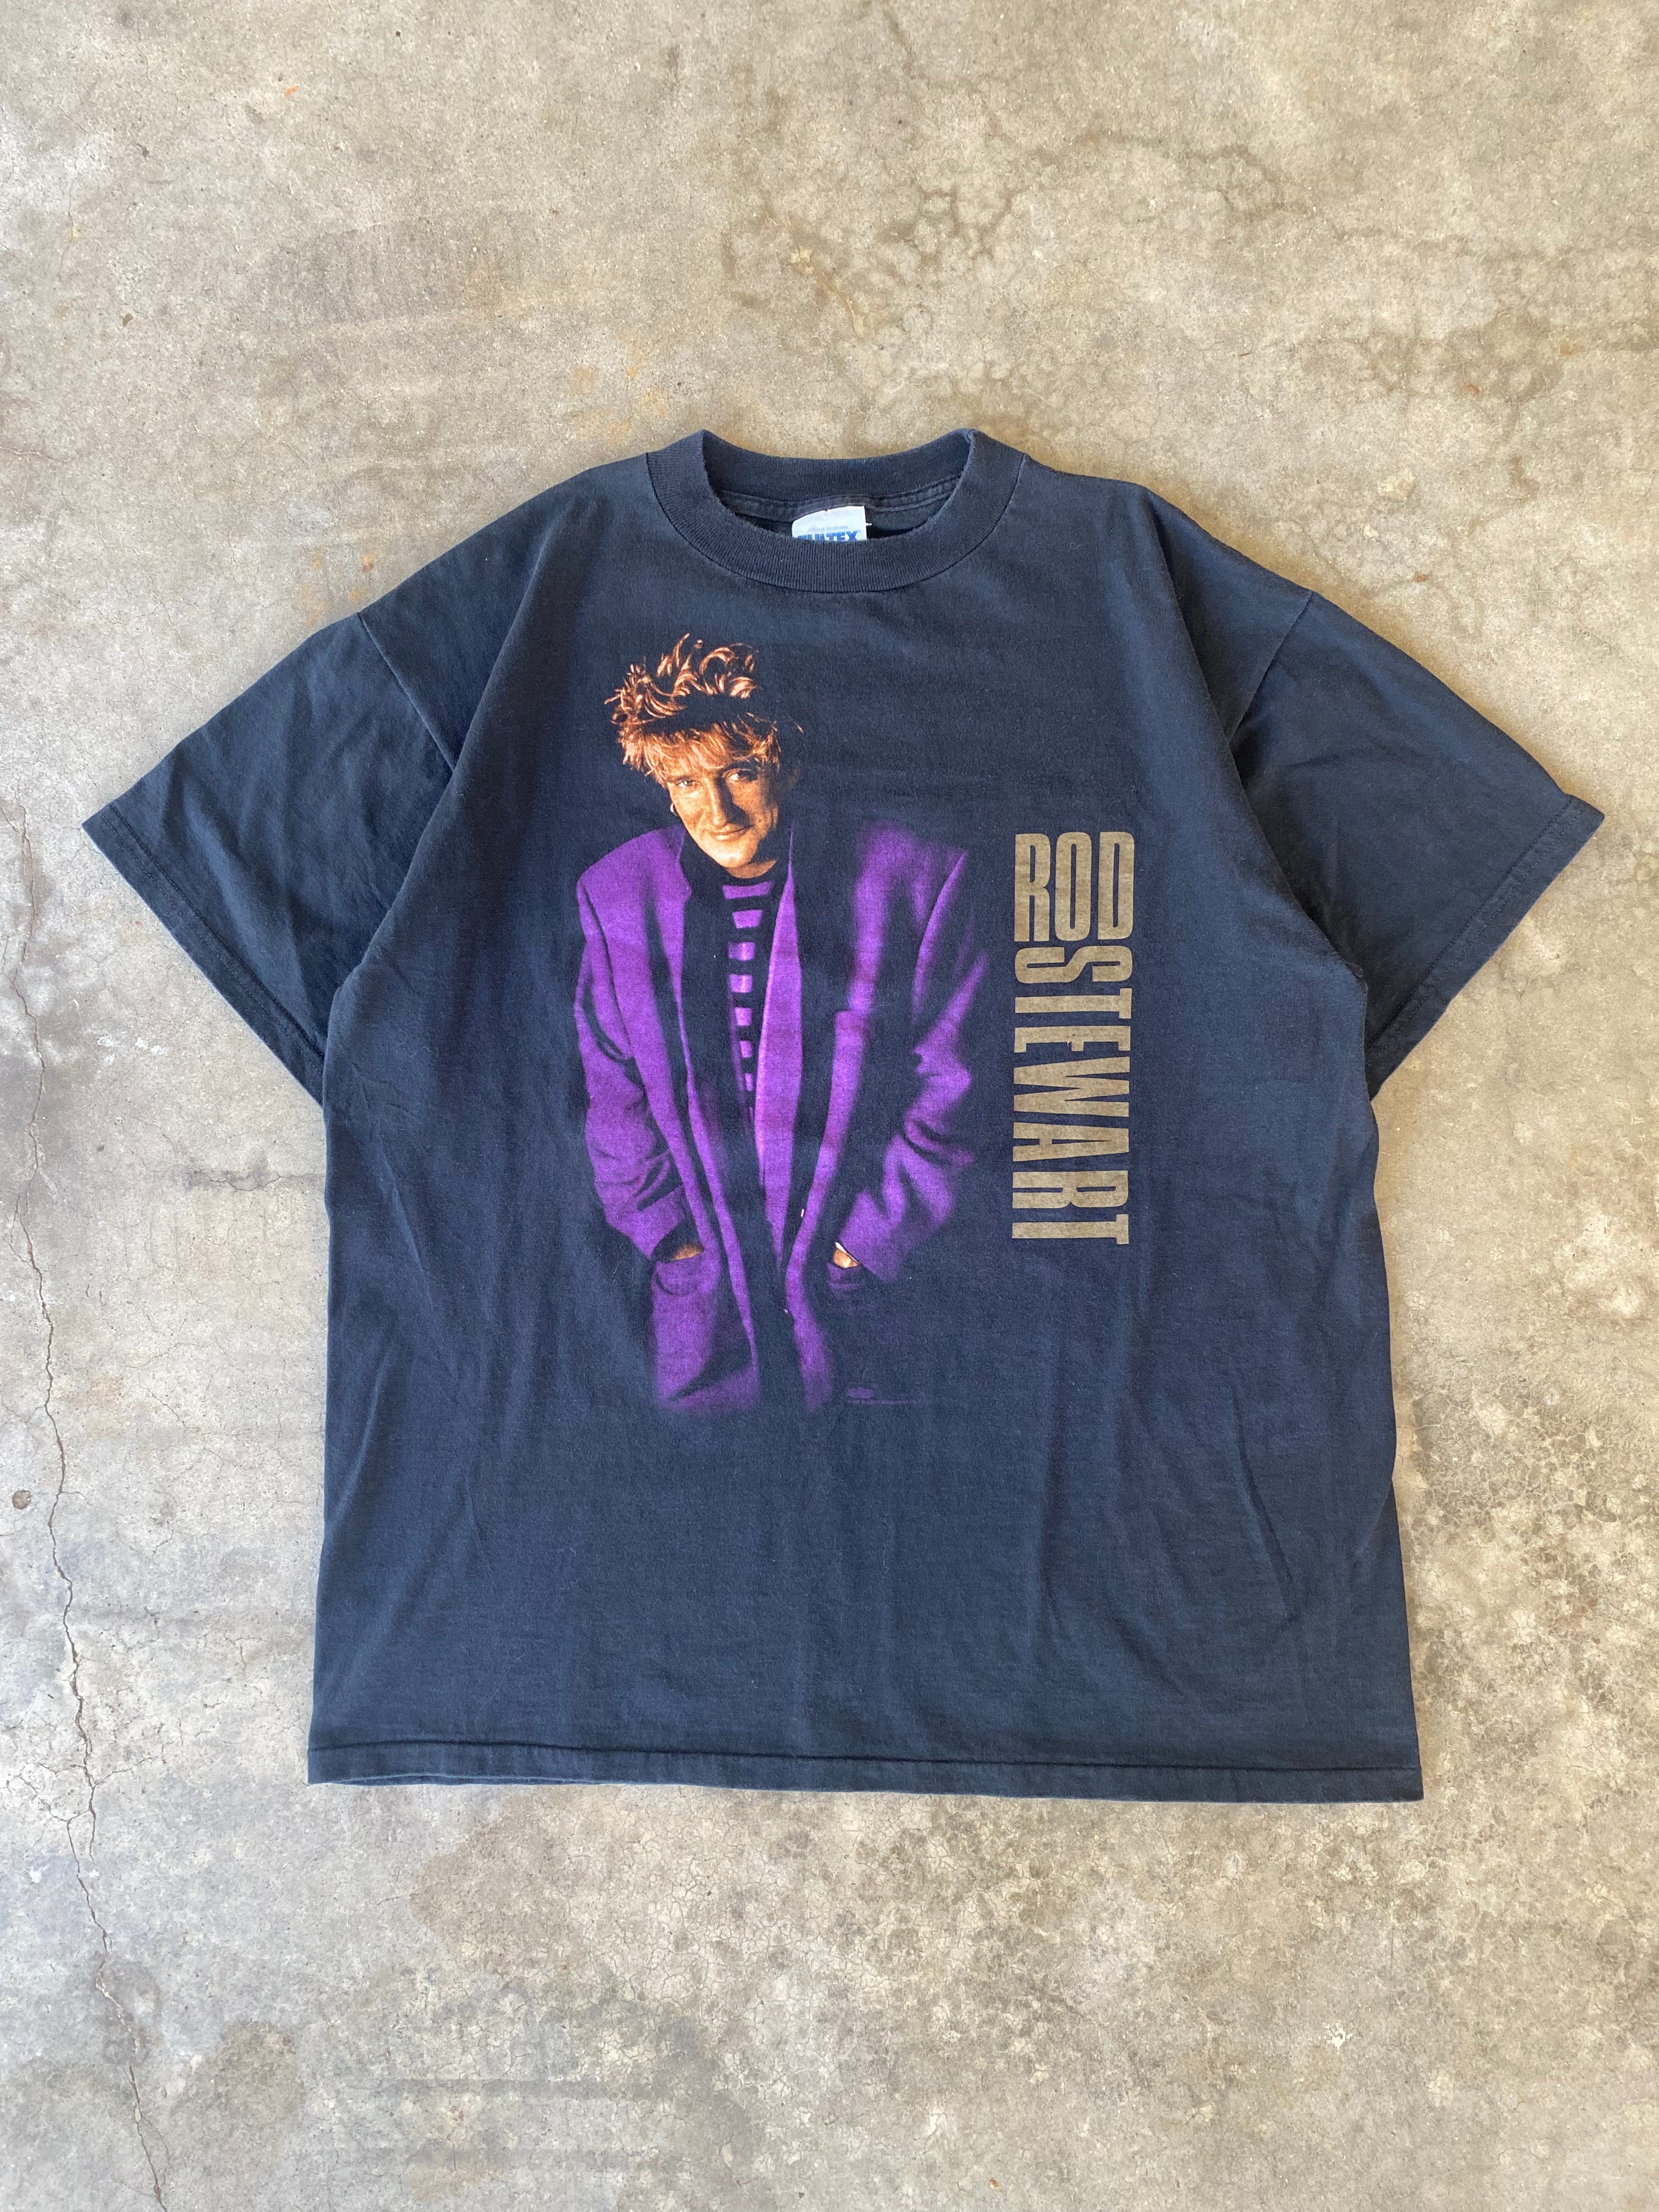 1990s Rod Stewart Live Tour T-Shirt (L)